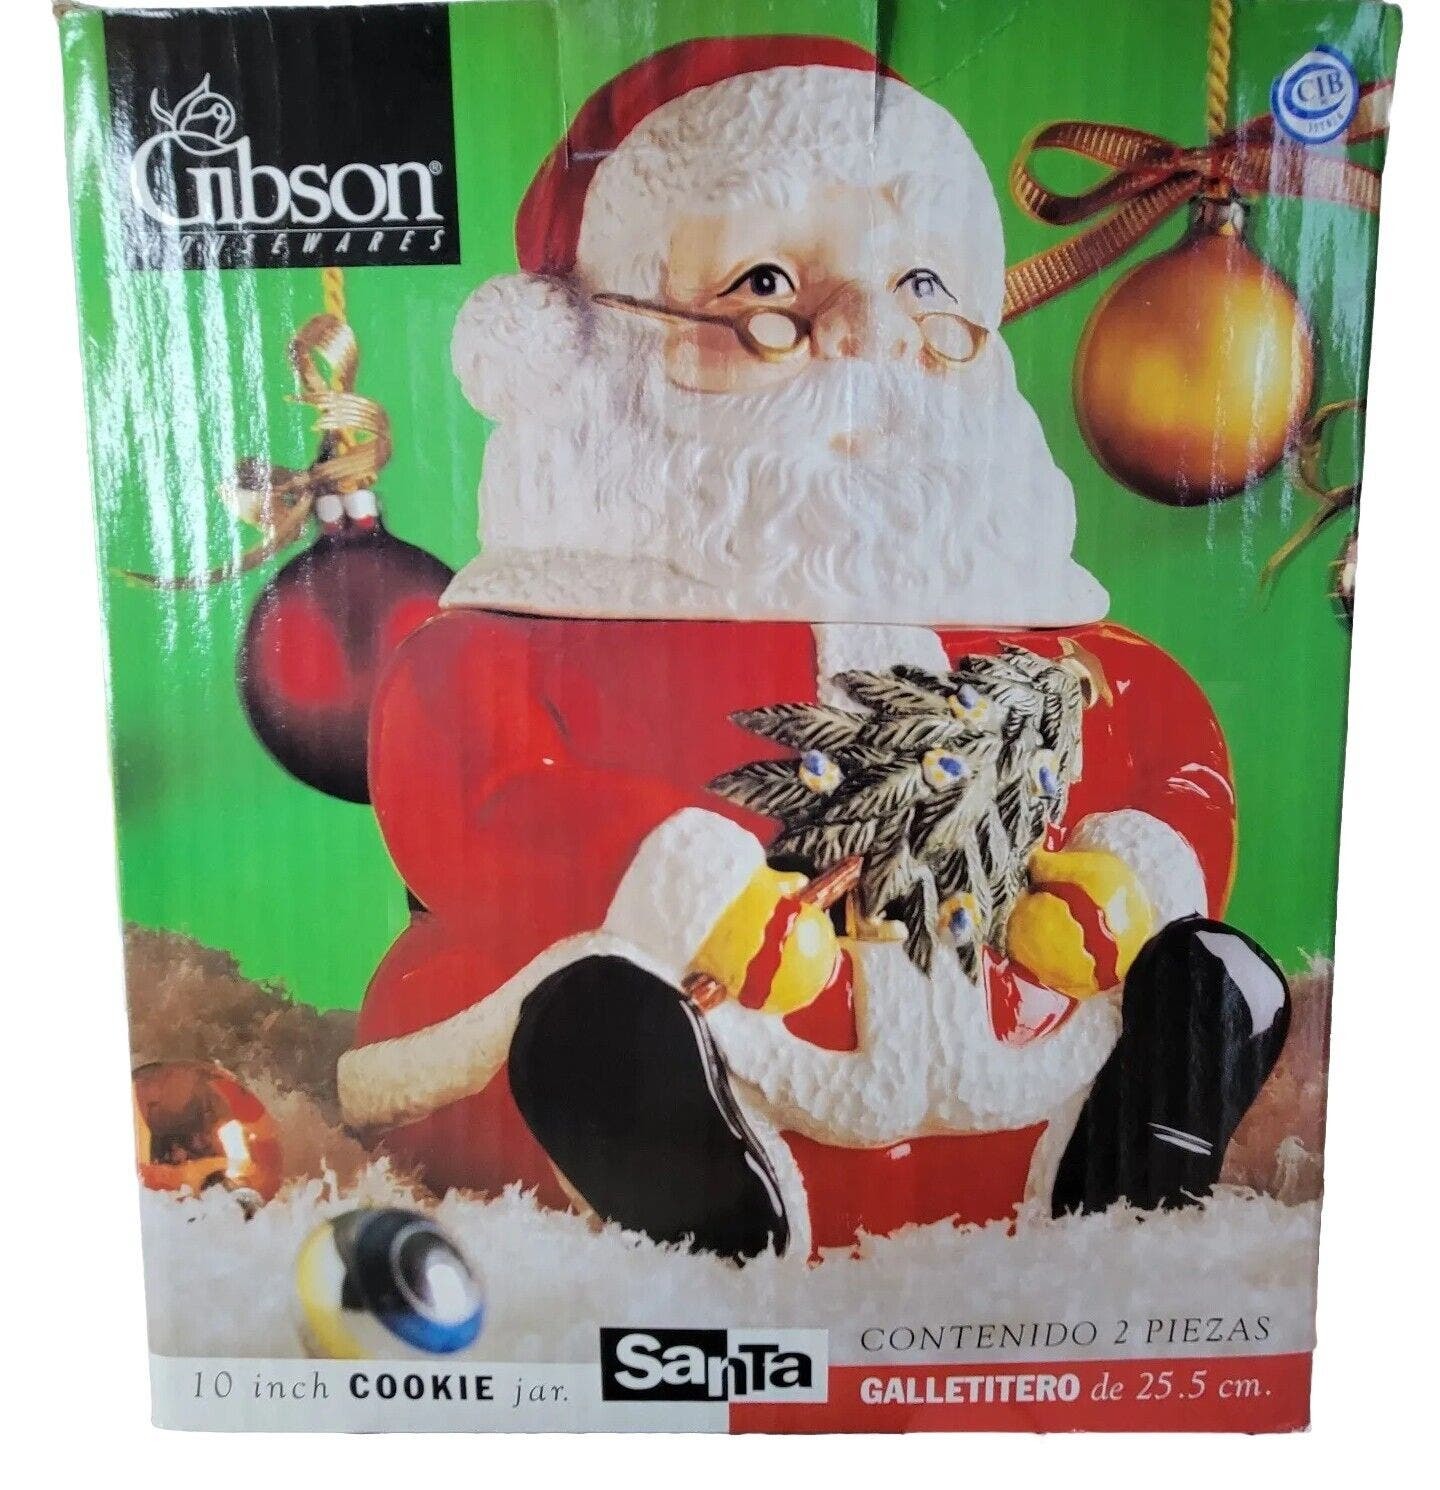 VTG Santa Claus Cookie Jar Gibson Ceramic 10" 1997 Christmas Holiday With Box - $22.66